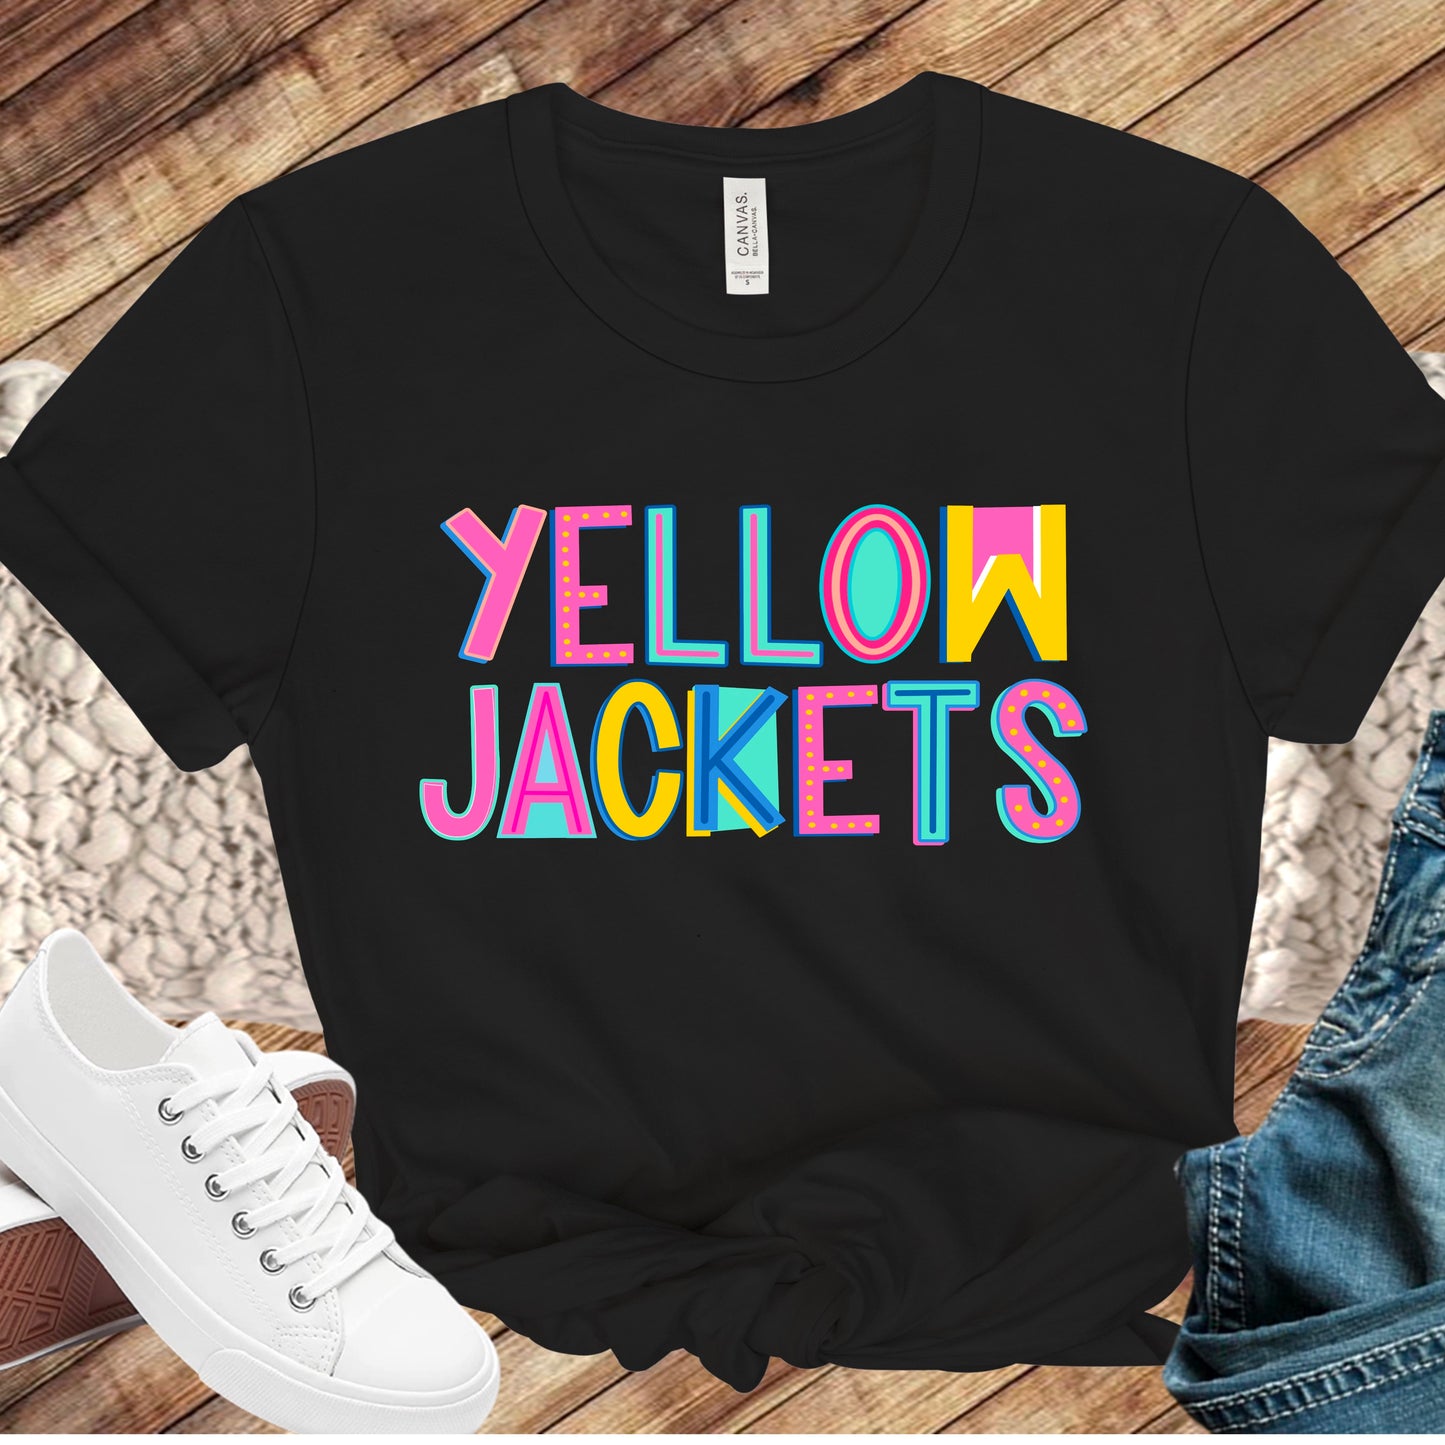 Yellowjackets Mascot (DTF) 3044